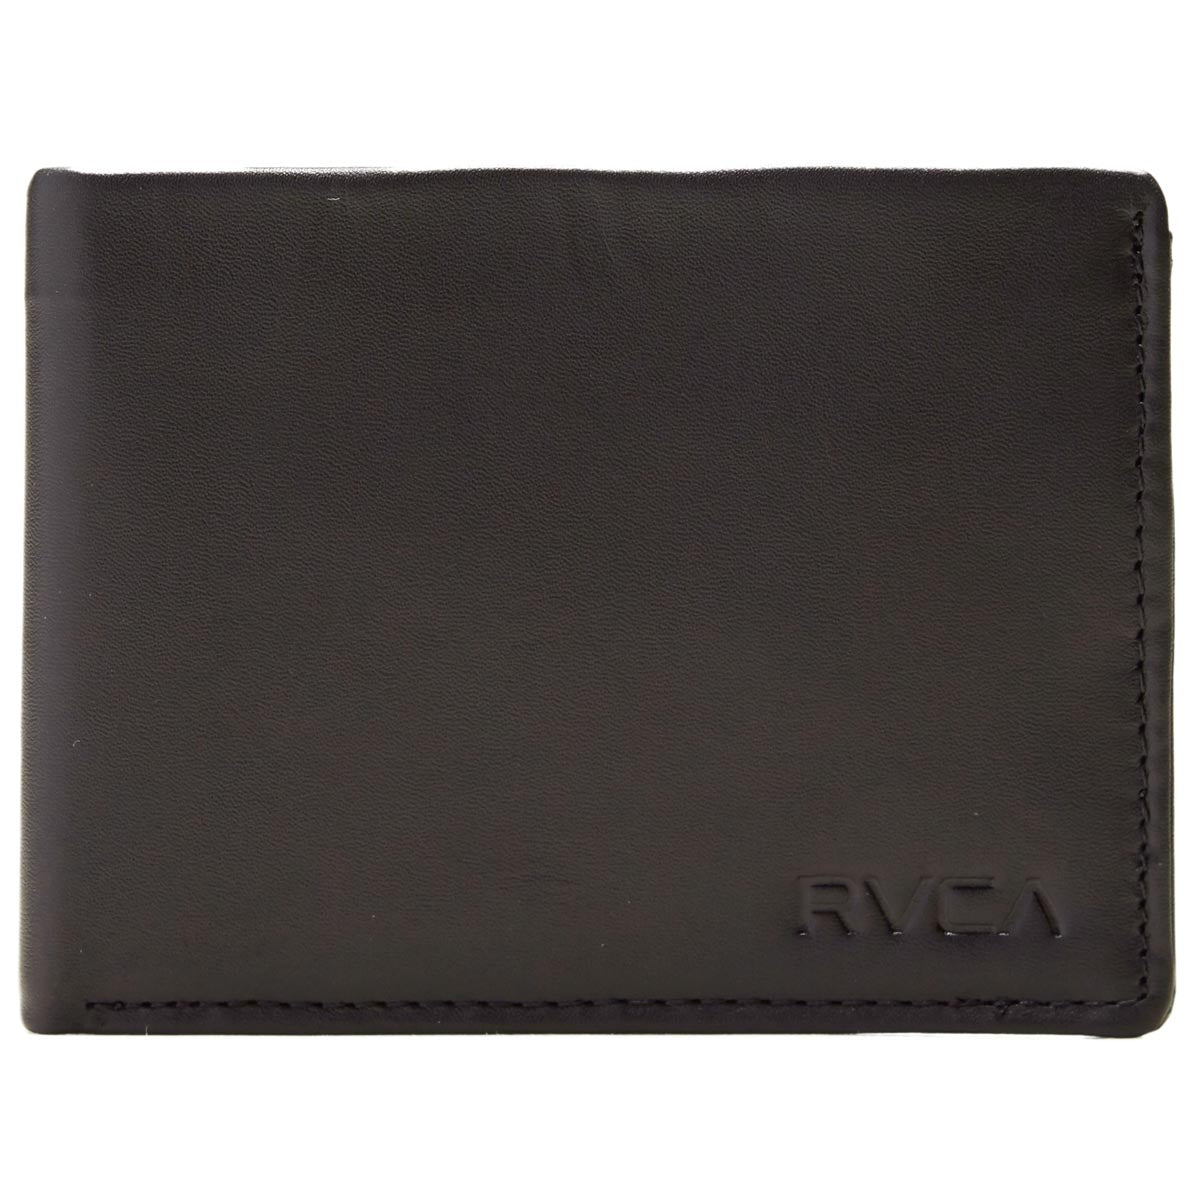 RVCA August Bifold Wallet - Black image 1